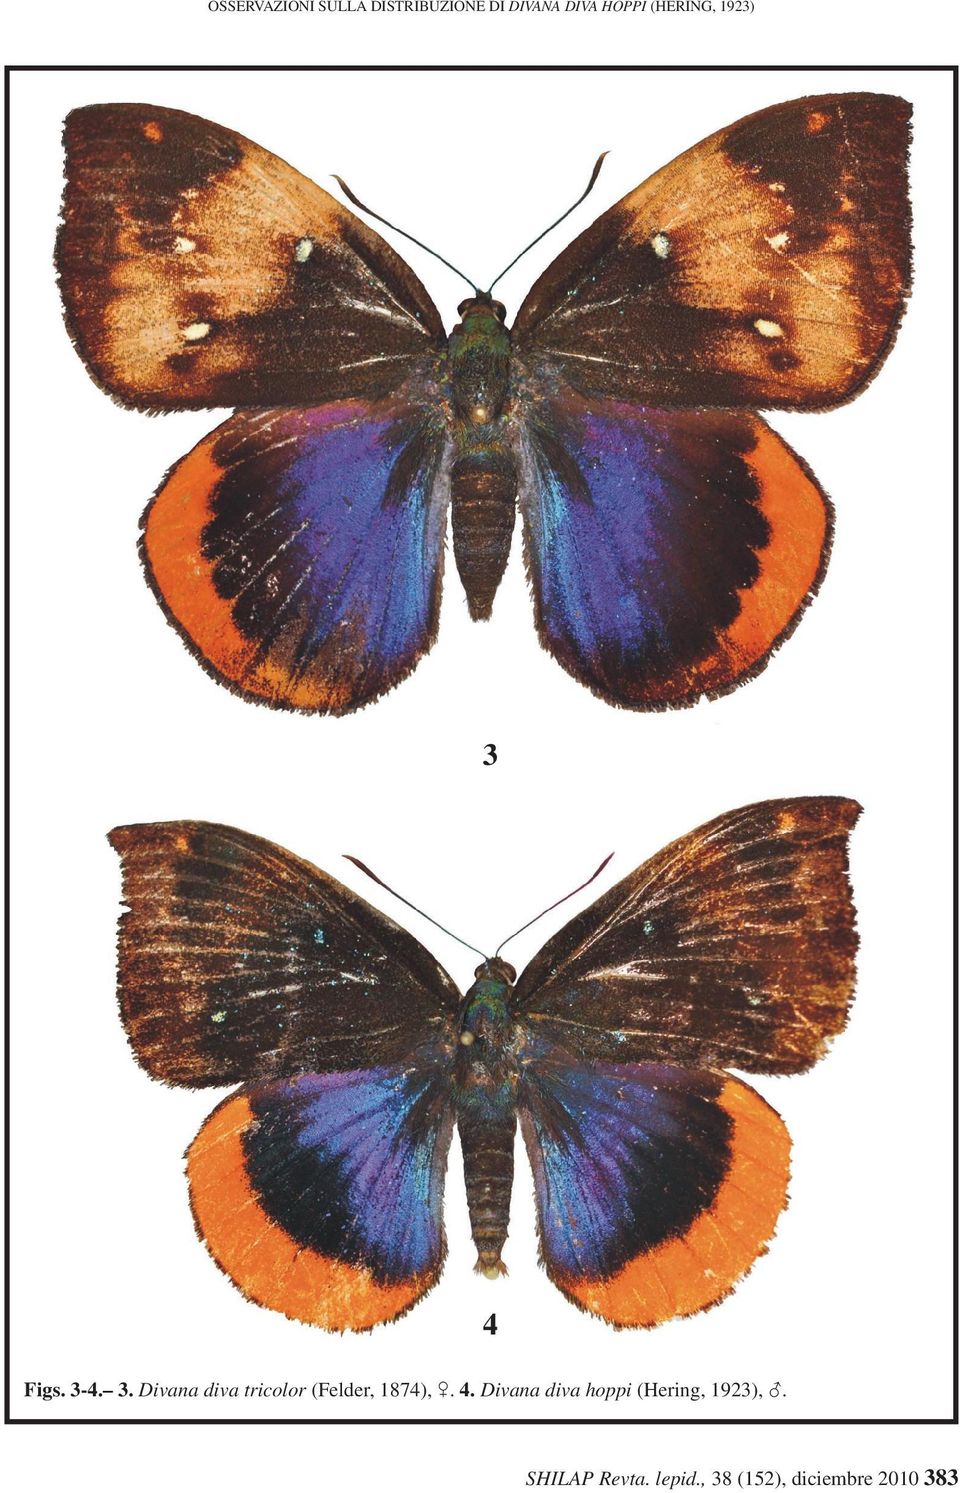 4 Figs. 3-4. 3. Divana diva tricolor (Felder, 1874), 0.